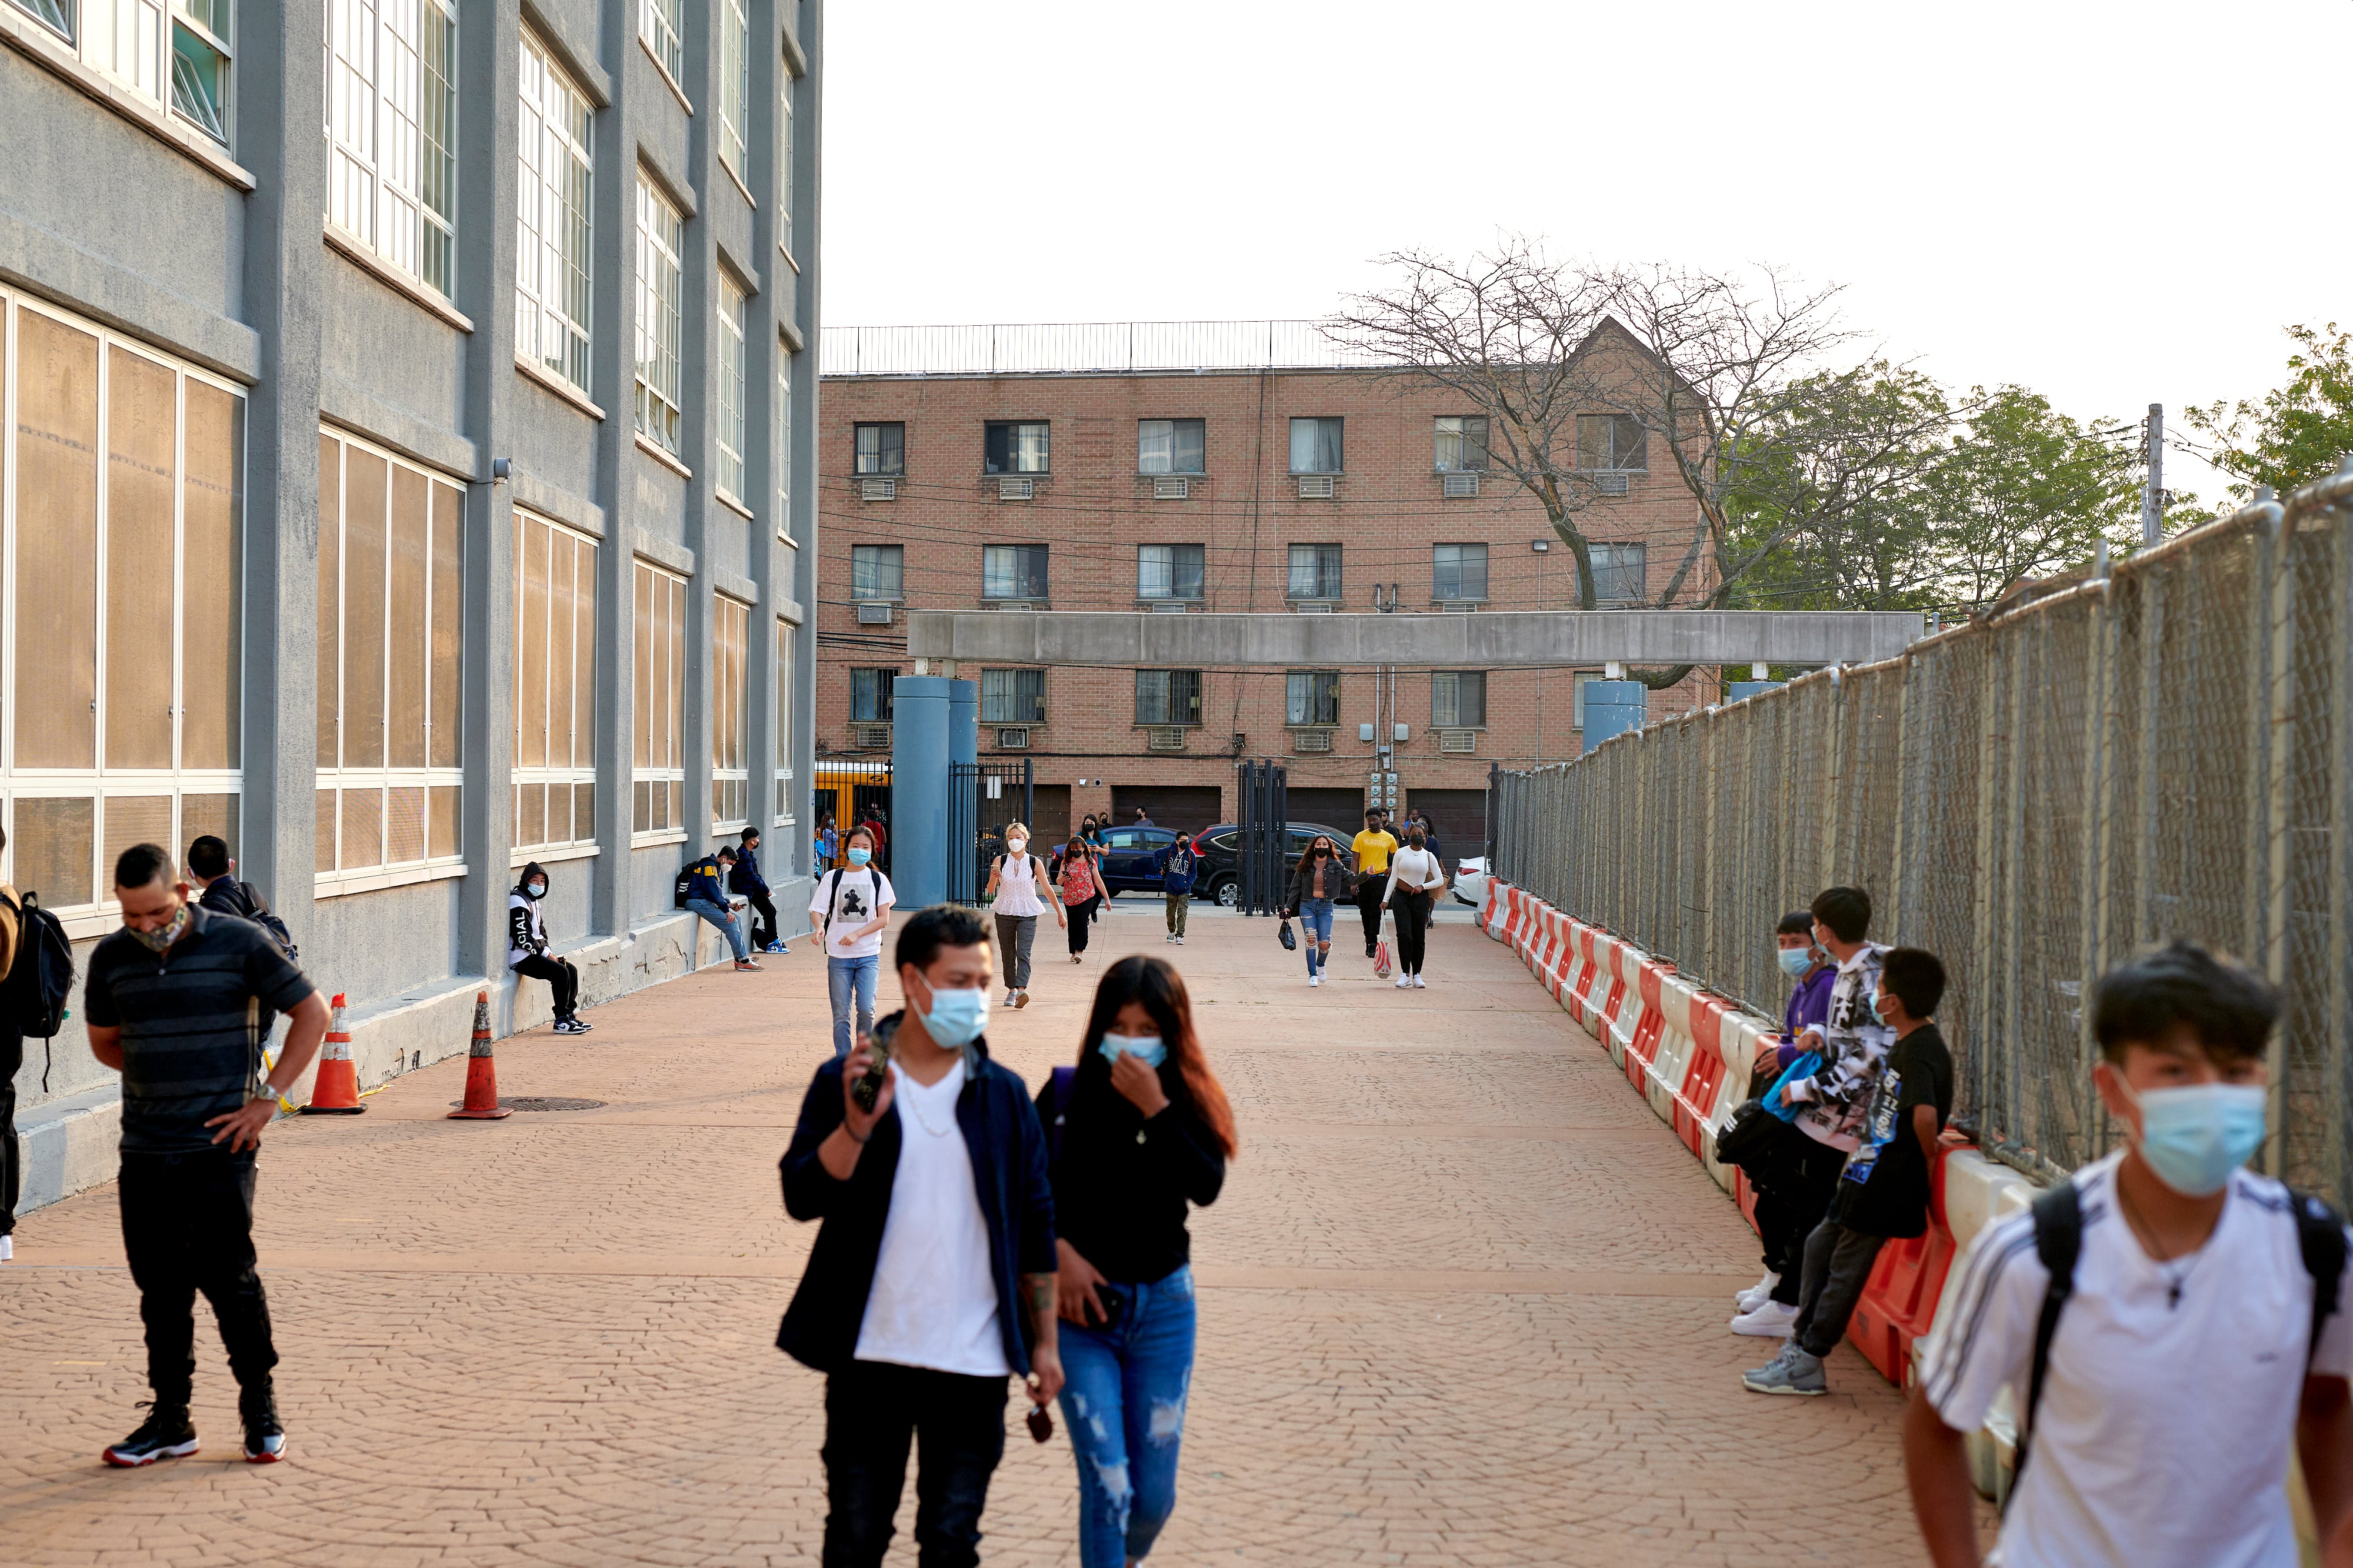 Students walk ouside a school building